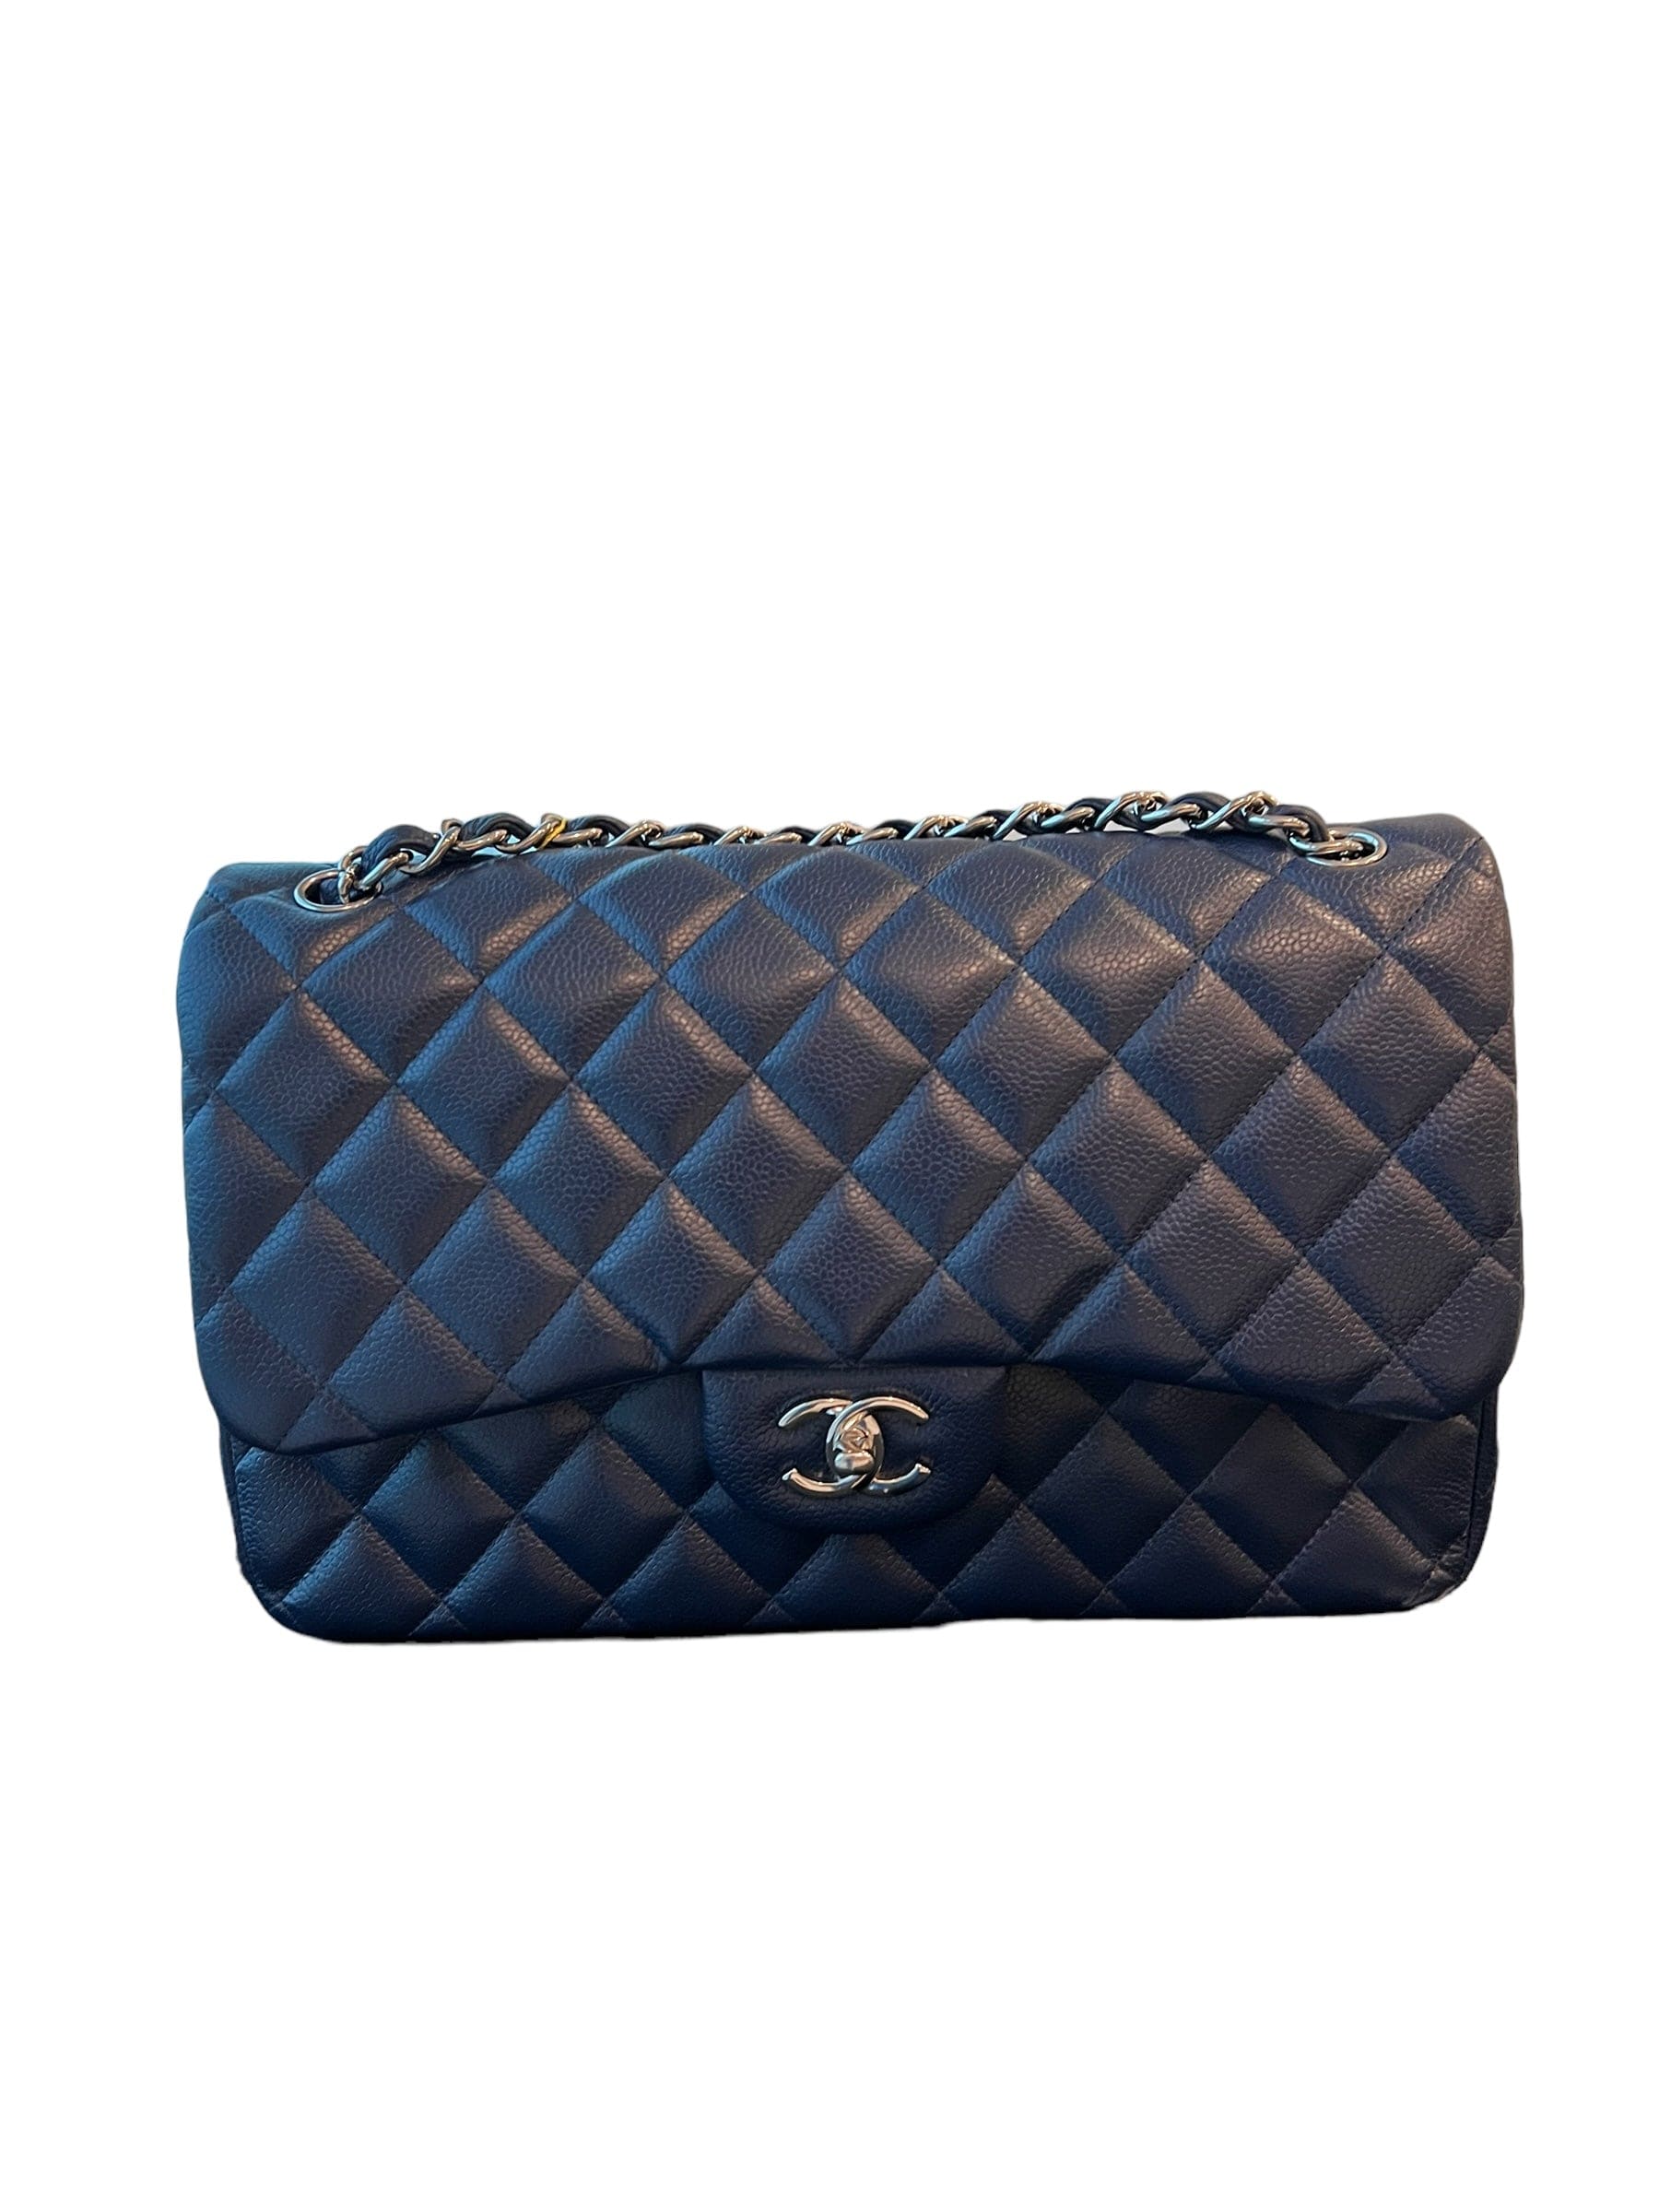 Chanel Chanel Classic Double Flap Jumbo Blue Caviar SHW
#15 SYCM114